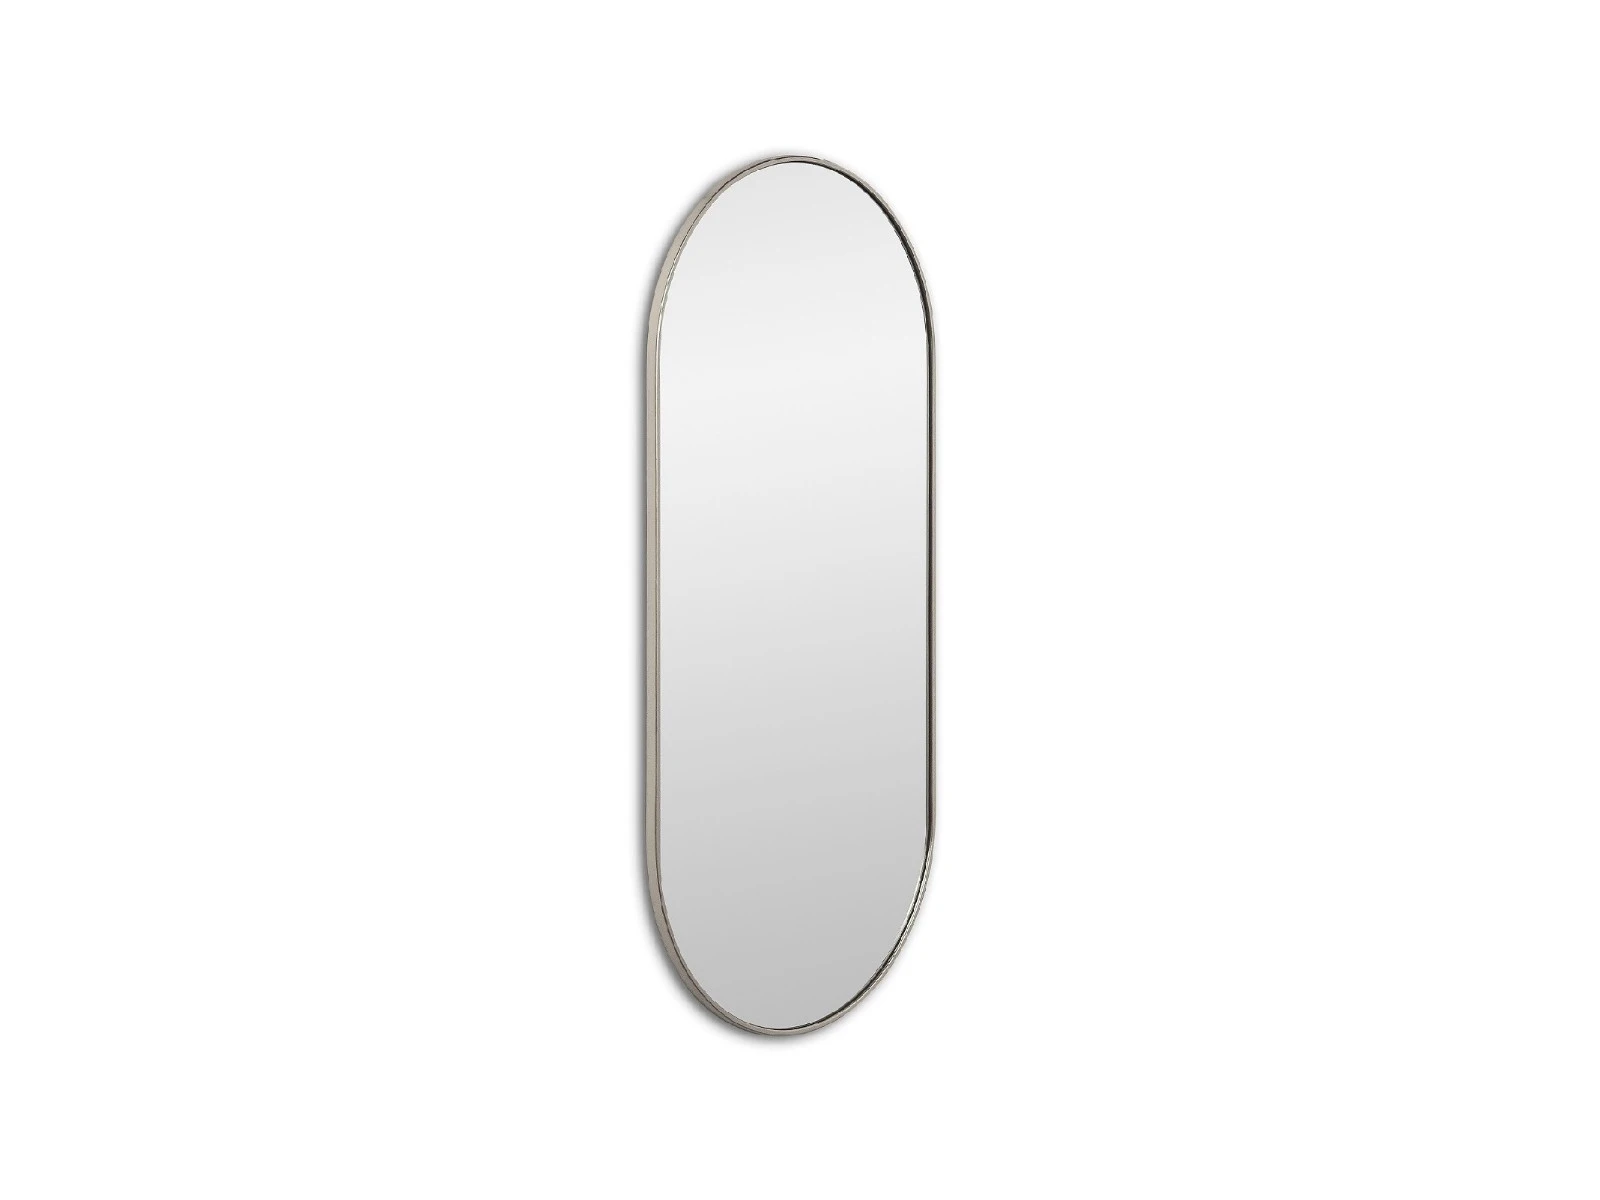 Овальное зеркало Kapsel S Silver 877434